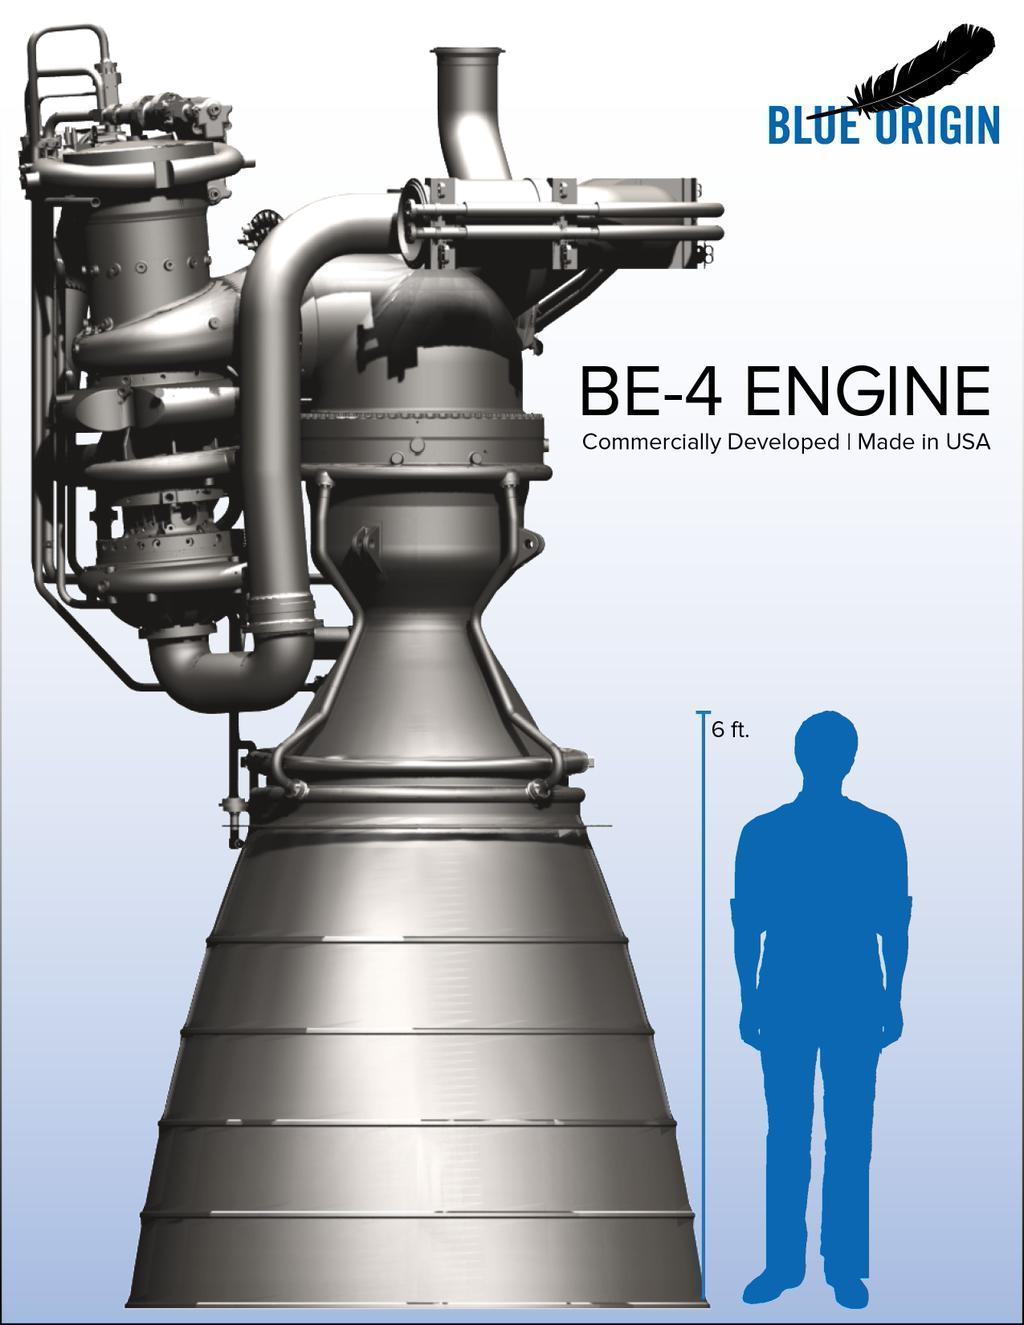 Blue Origin BE-4 engine and man comparison